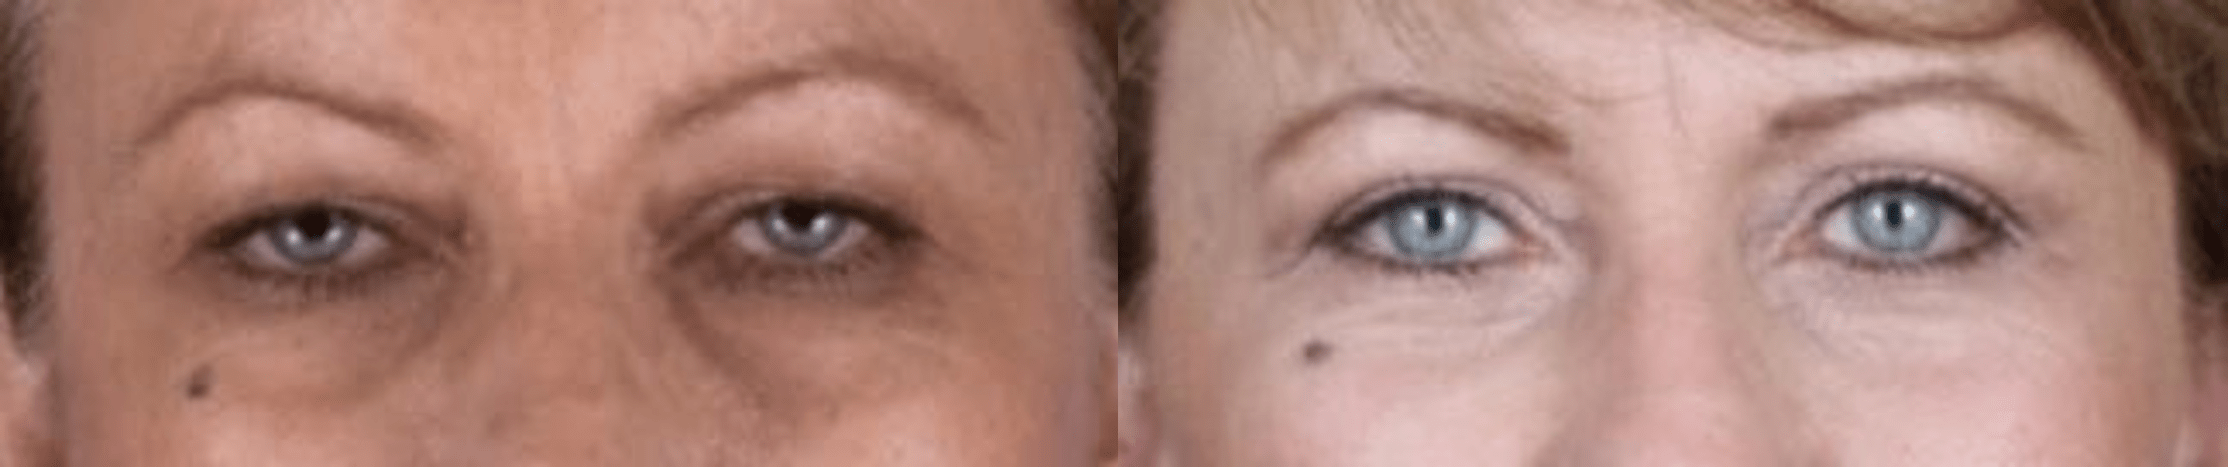 Quad Blepharoplasty Before and After to Rejuvenate the Eyelids